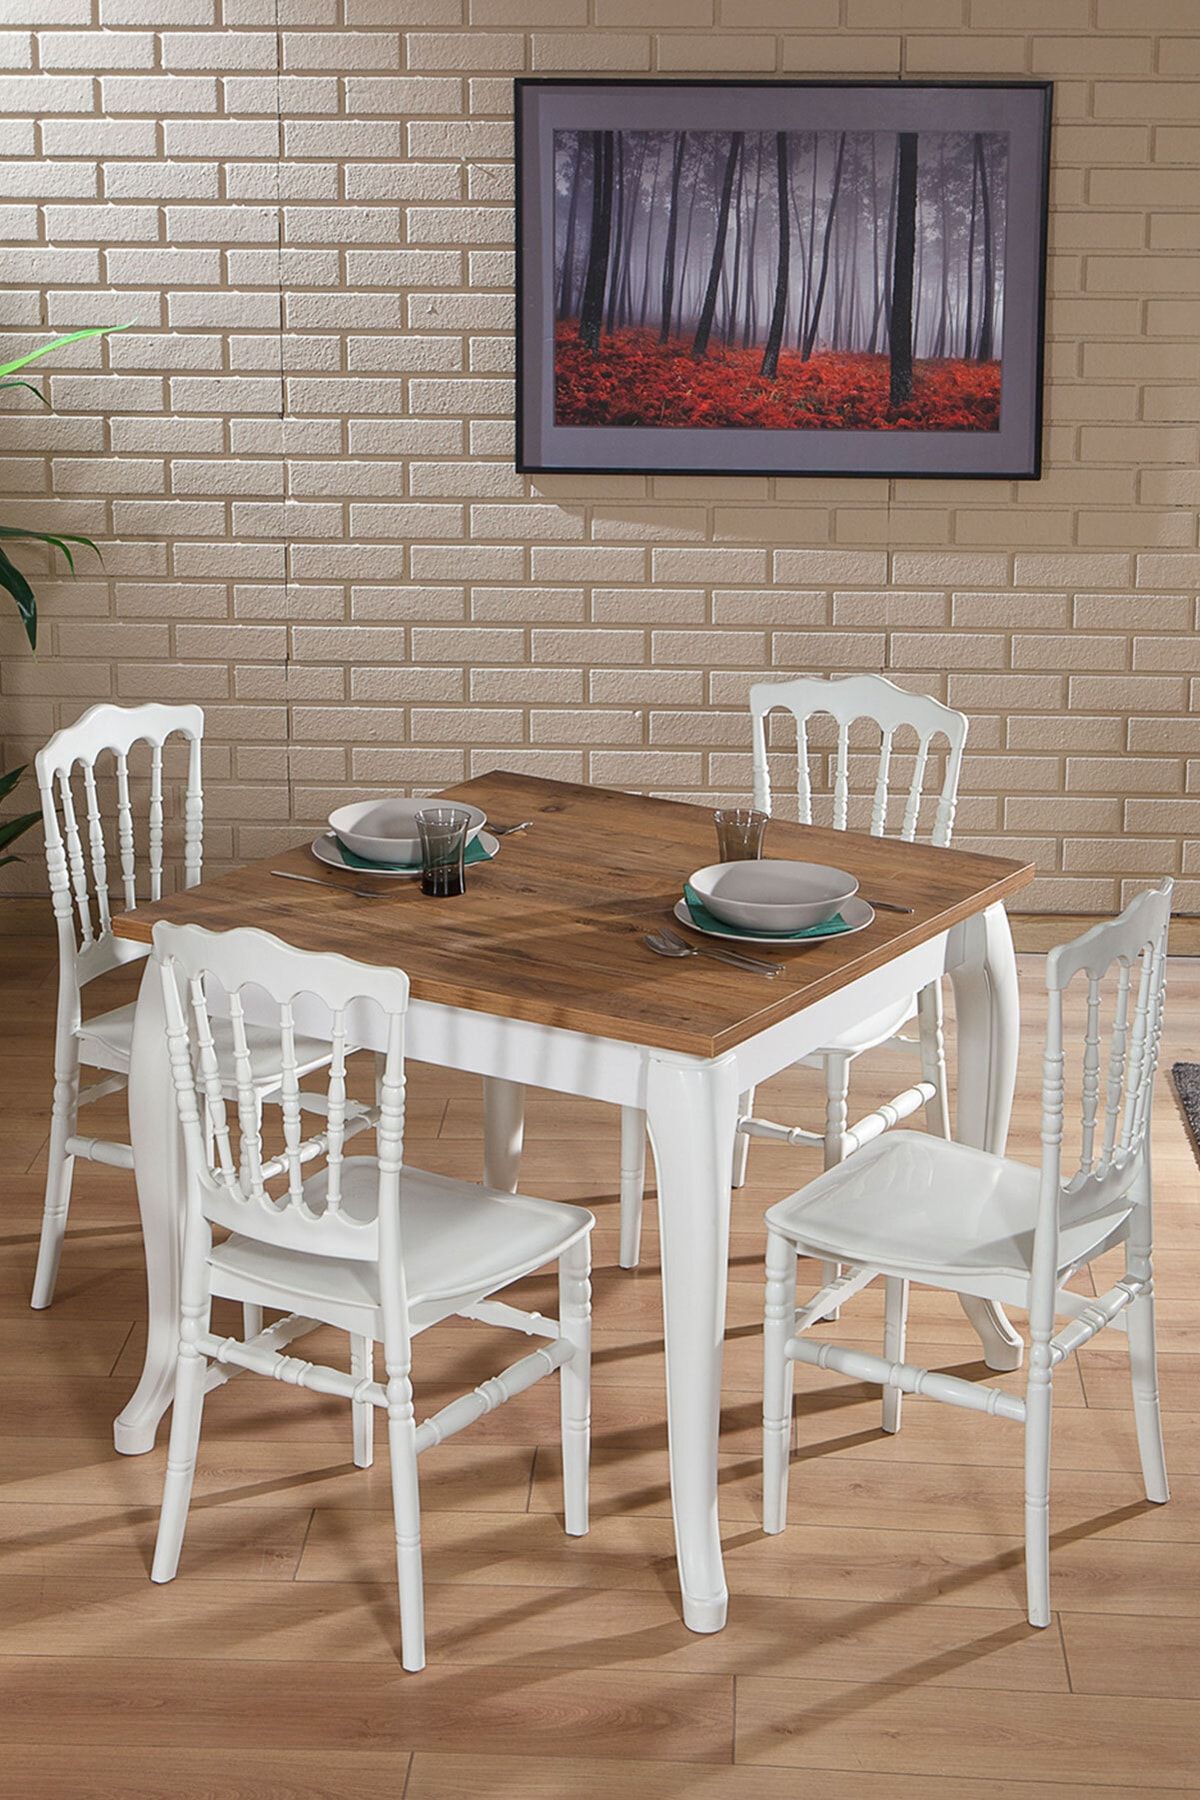 SANDALİE Miray Beyaz / Sirius Sabit Masa - 4 Sandalye 1 Masa / Salon - Mutfak Masa Takımı